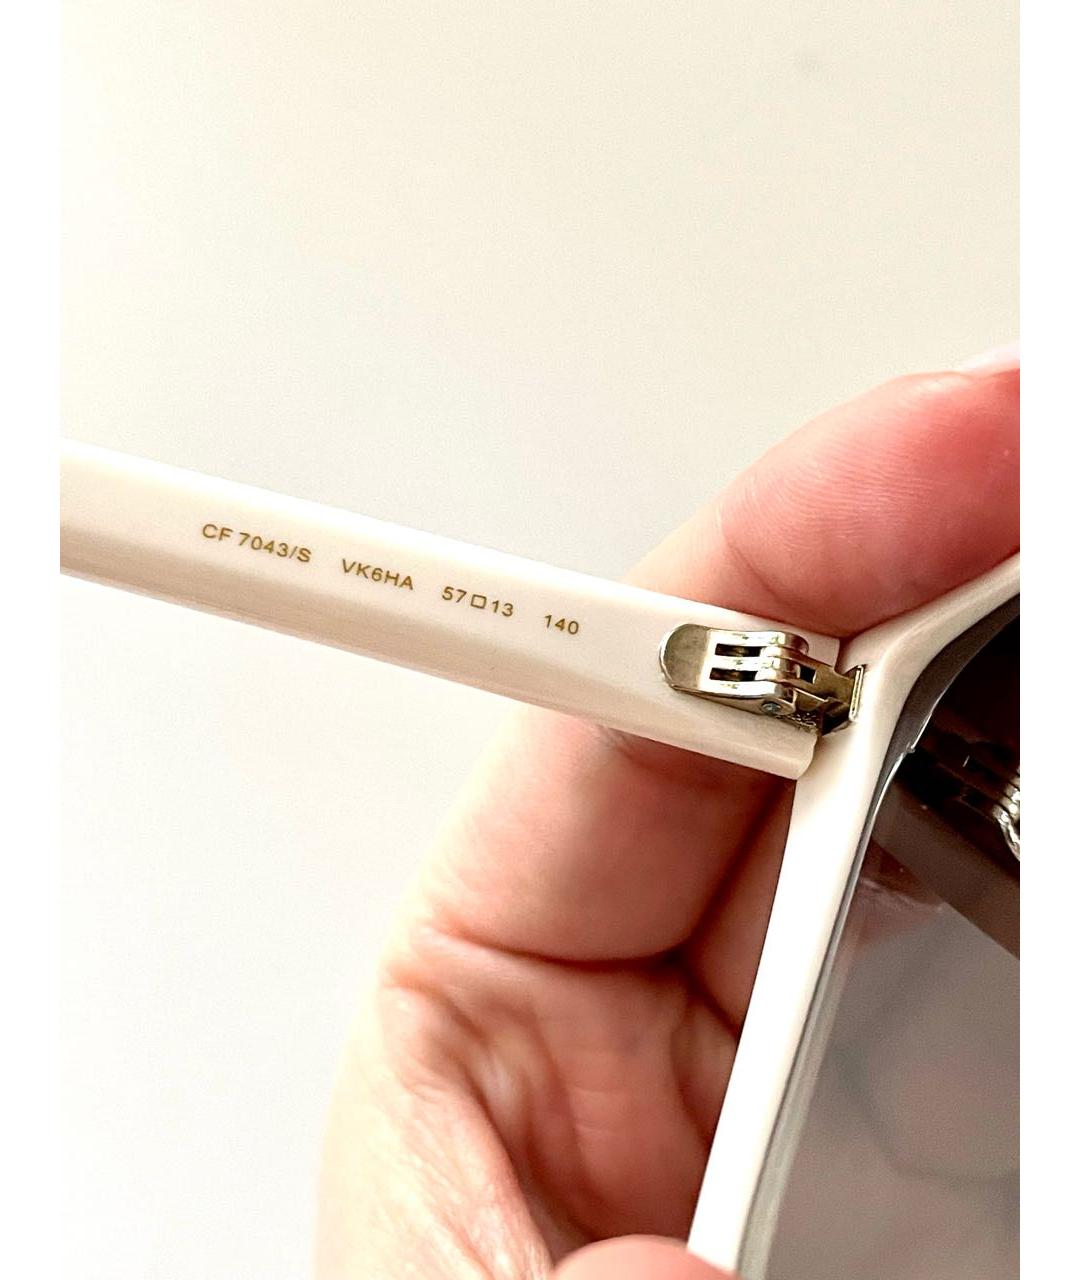 CHIARA FERRAGNI Белые пластиковые солнцезащитные очки, фото 8